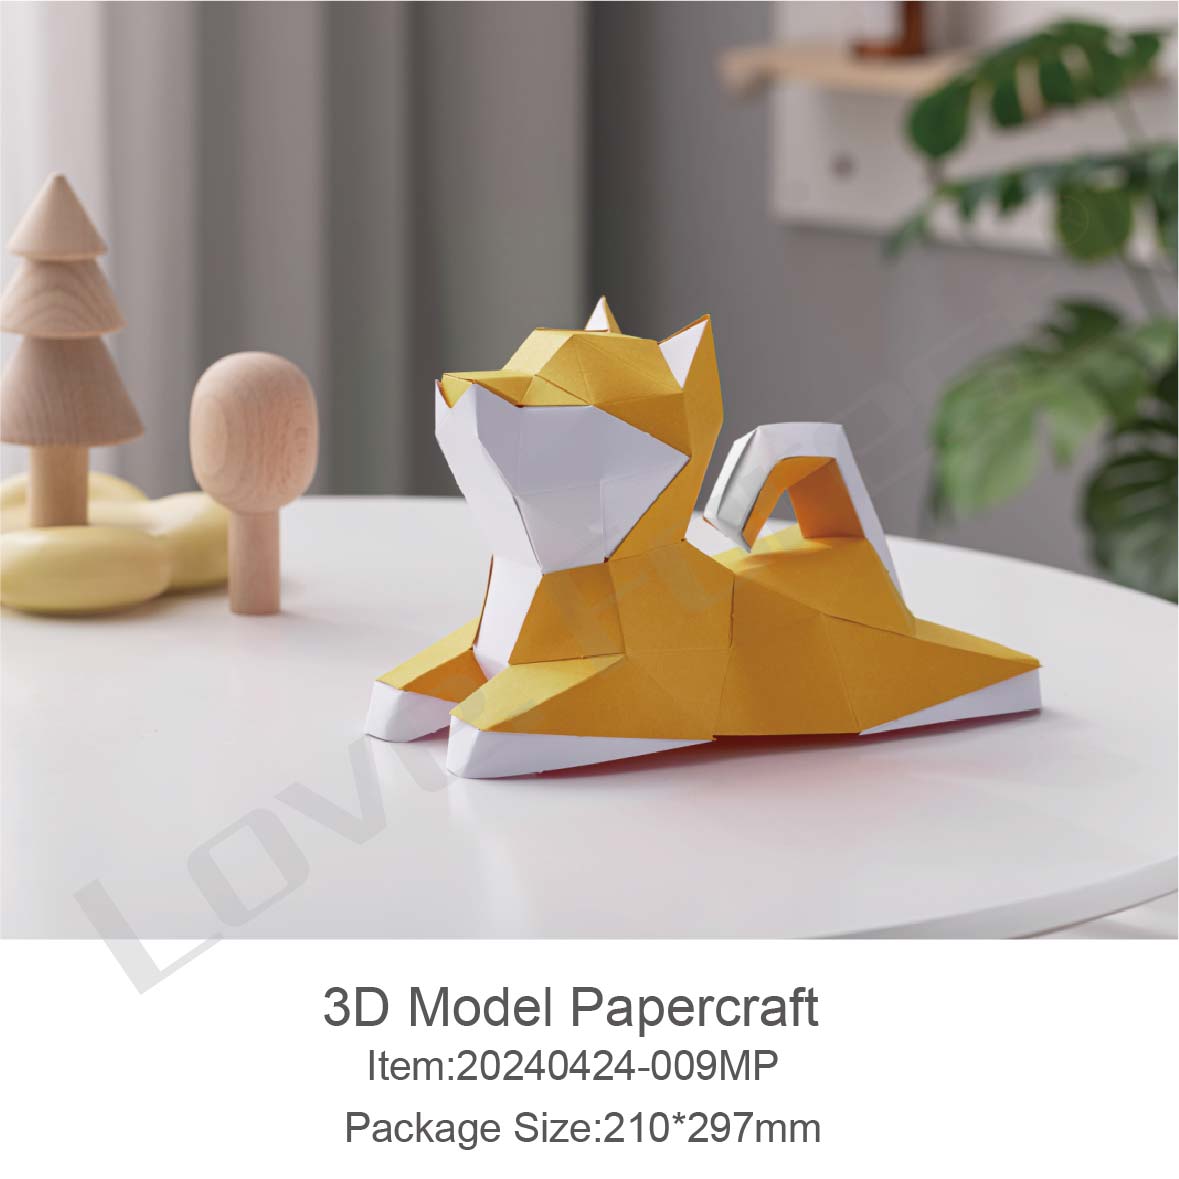 3D Model Papercraft